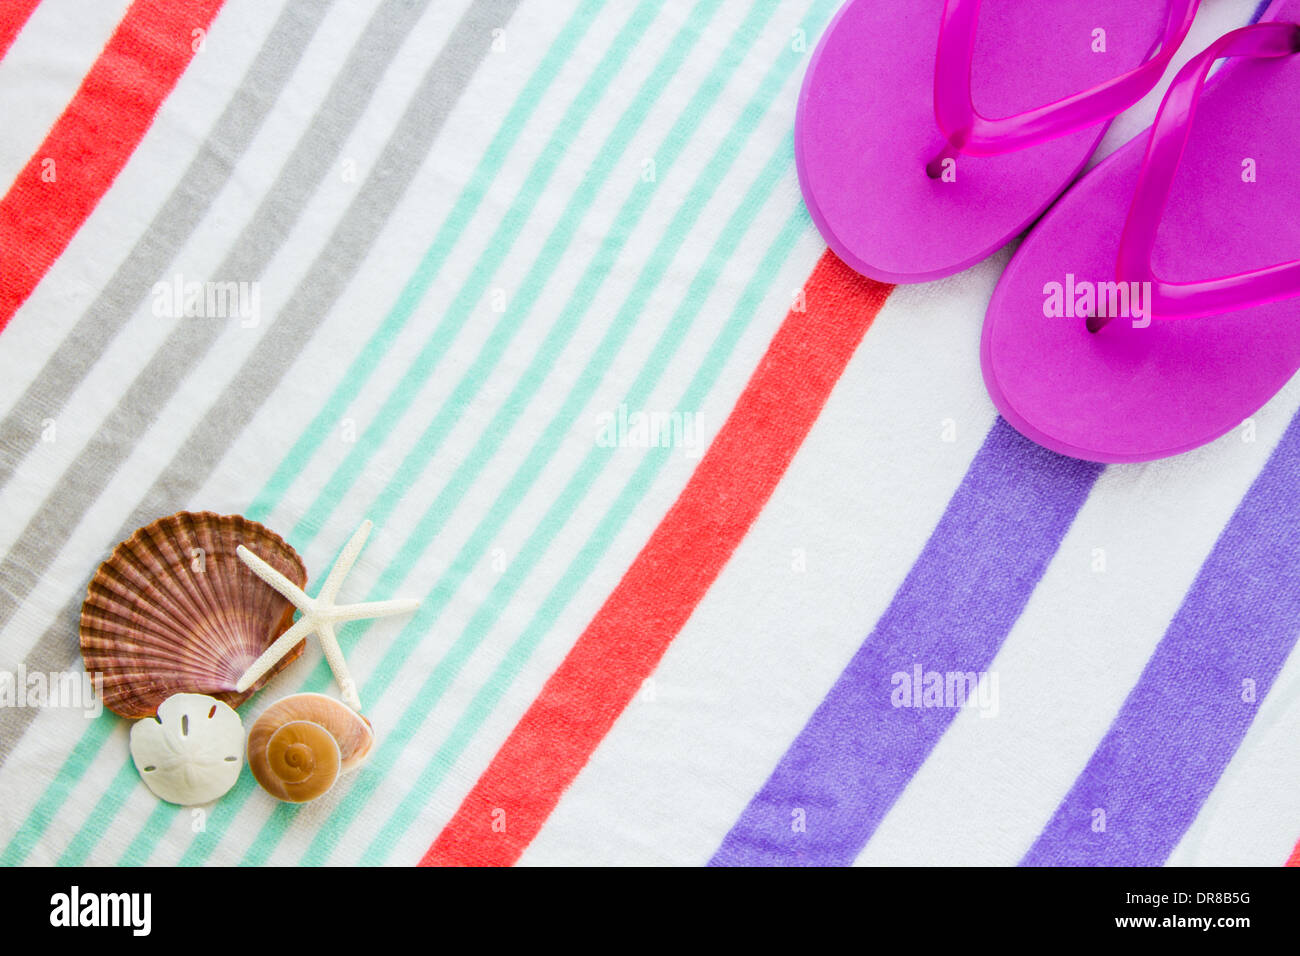 Beach scene with purple flip flops, shells, starfish, and a sand dollar on a striped beach towel. Stock Photo